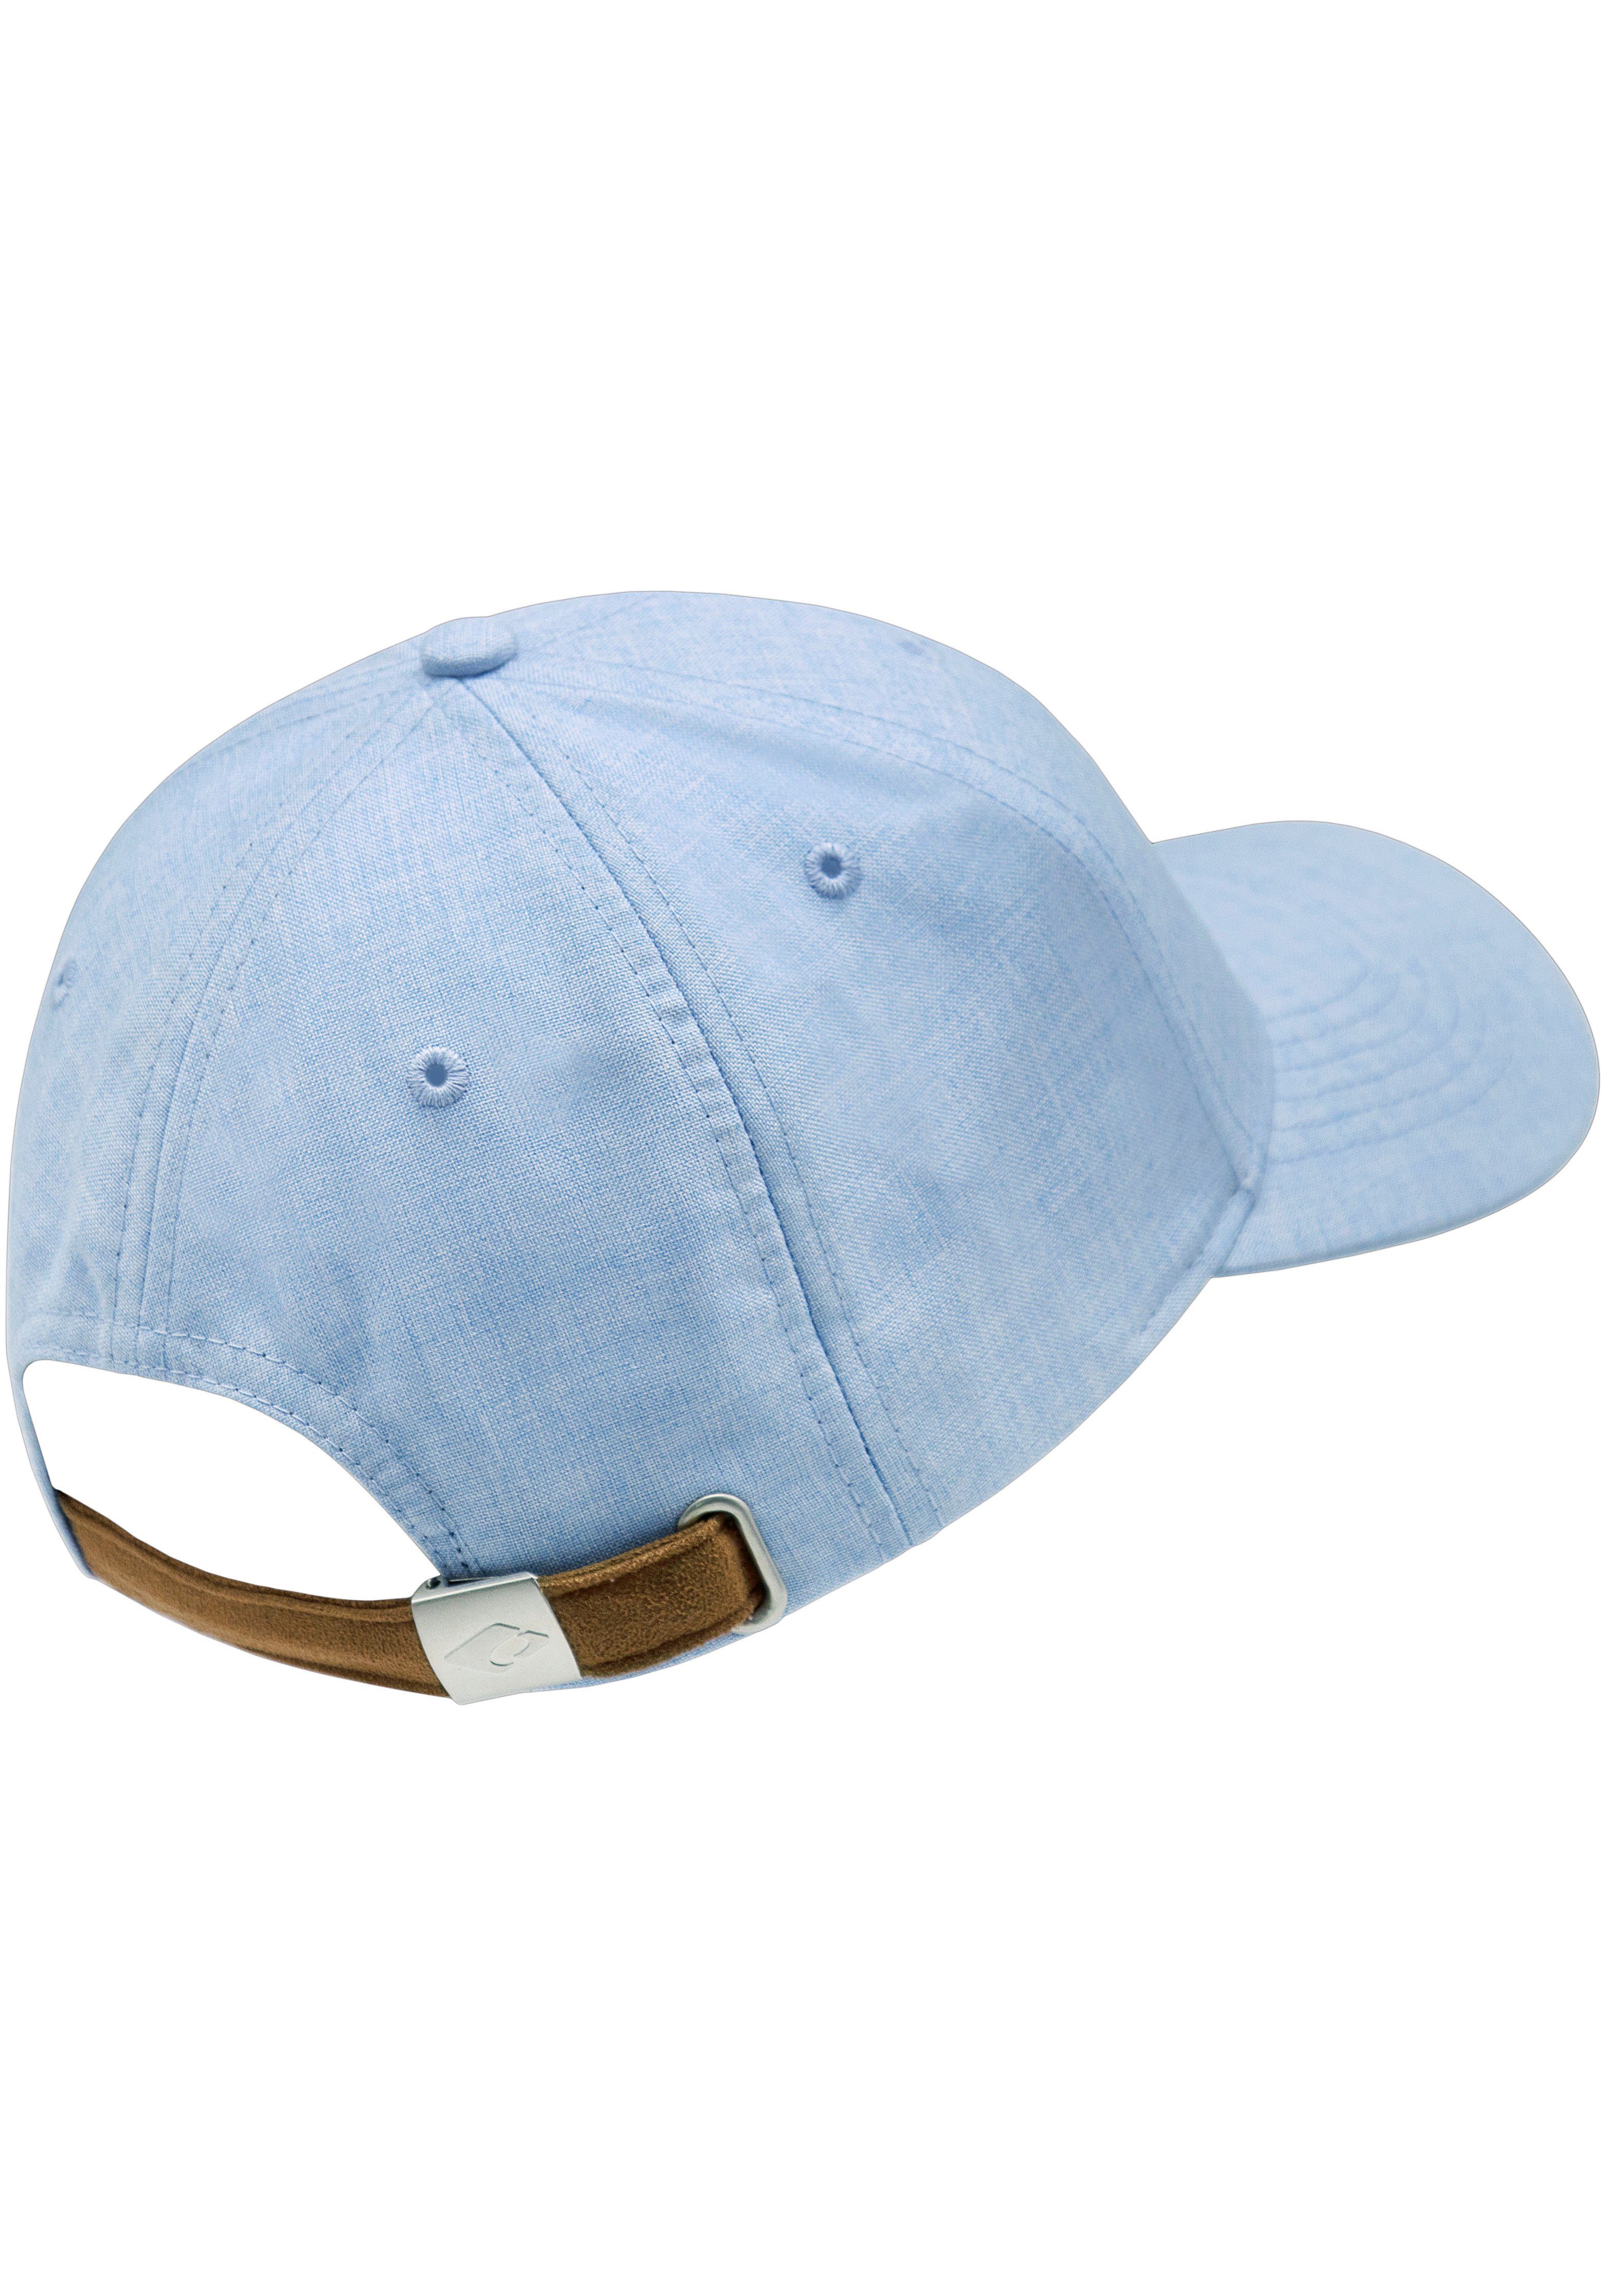 Optik, Size, Amadora melierter One Cap in Hat verstellbar hellblau chillouts Baseball